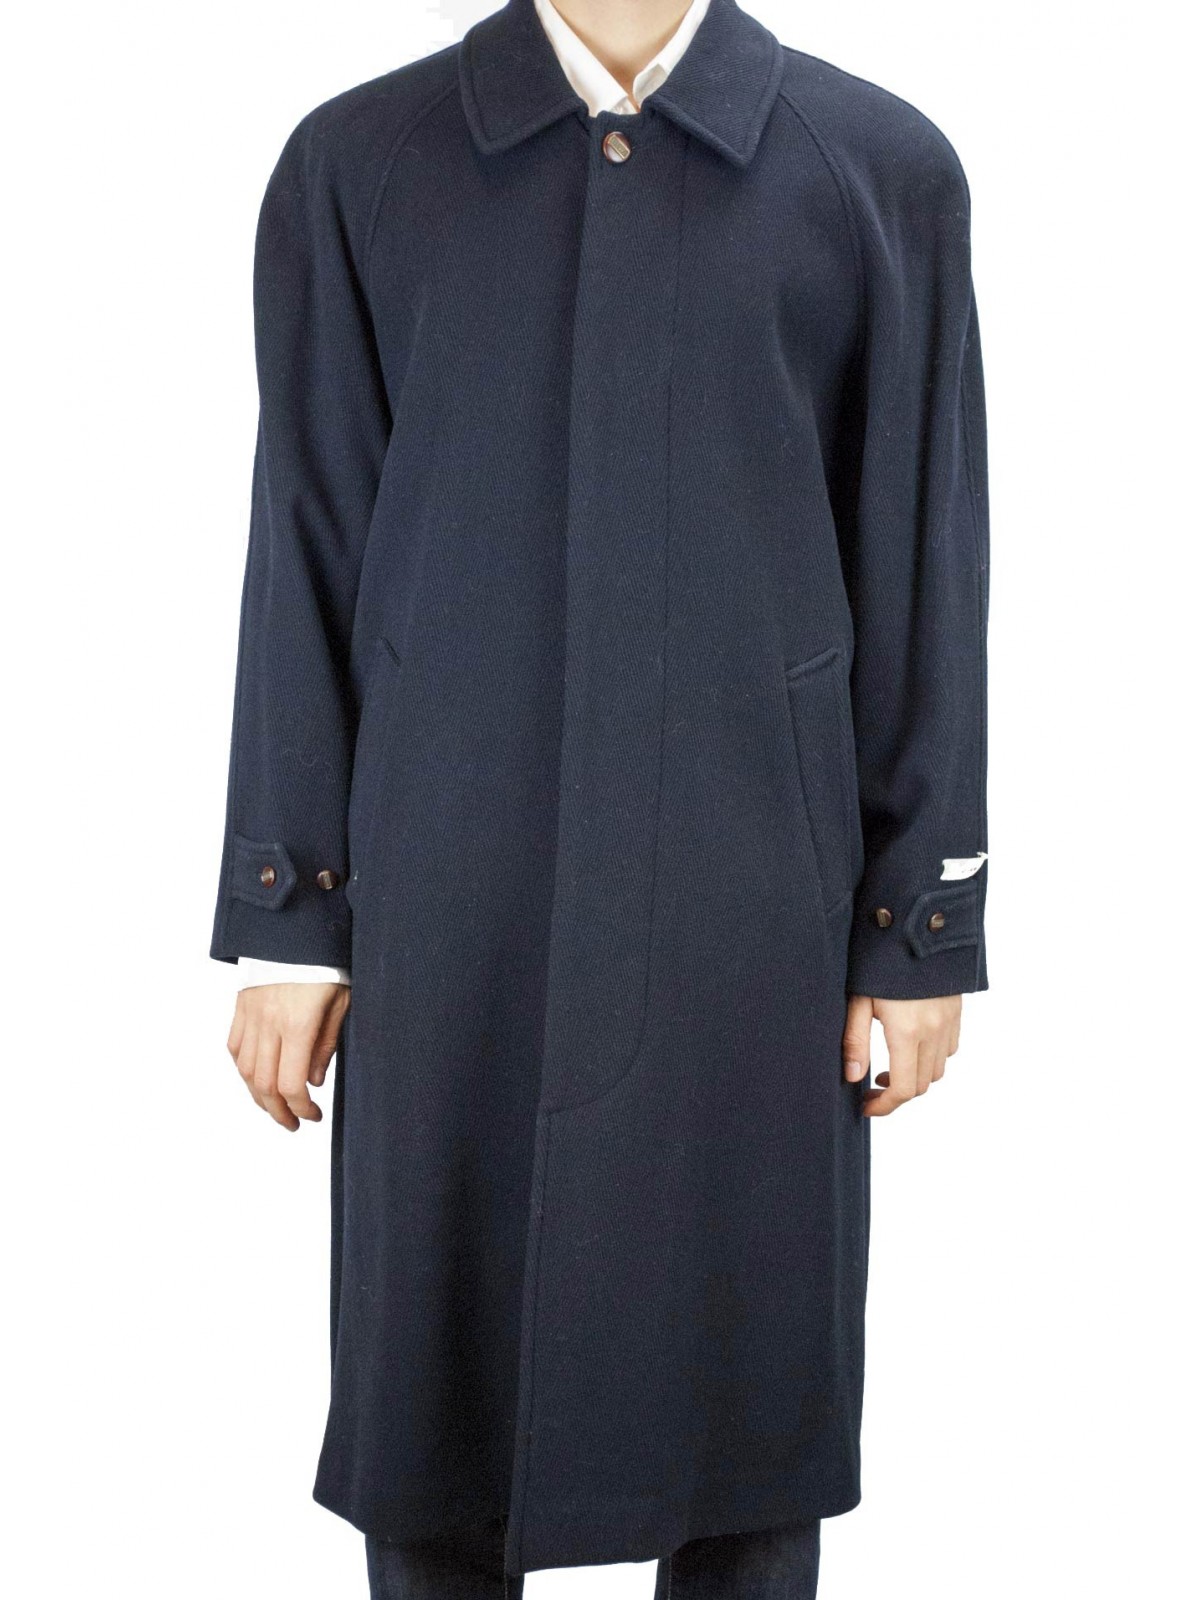 Navigare Men's Coat M Dark Blue Cashmere Blend Wide Raglan Sleeve - Trajes, chaquetas y chalecos para hombre